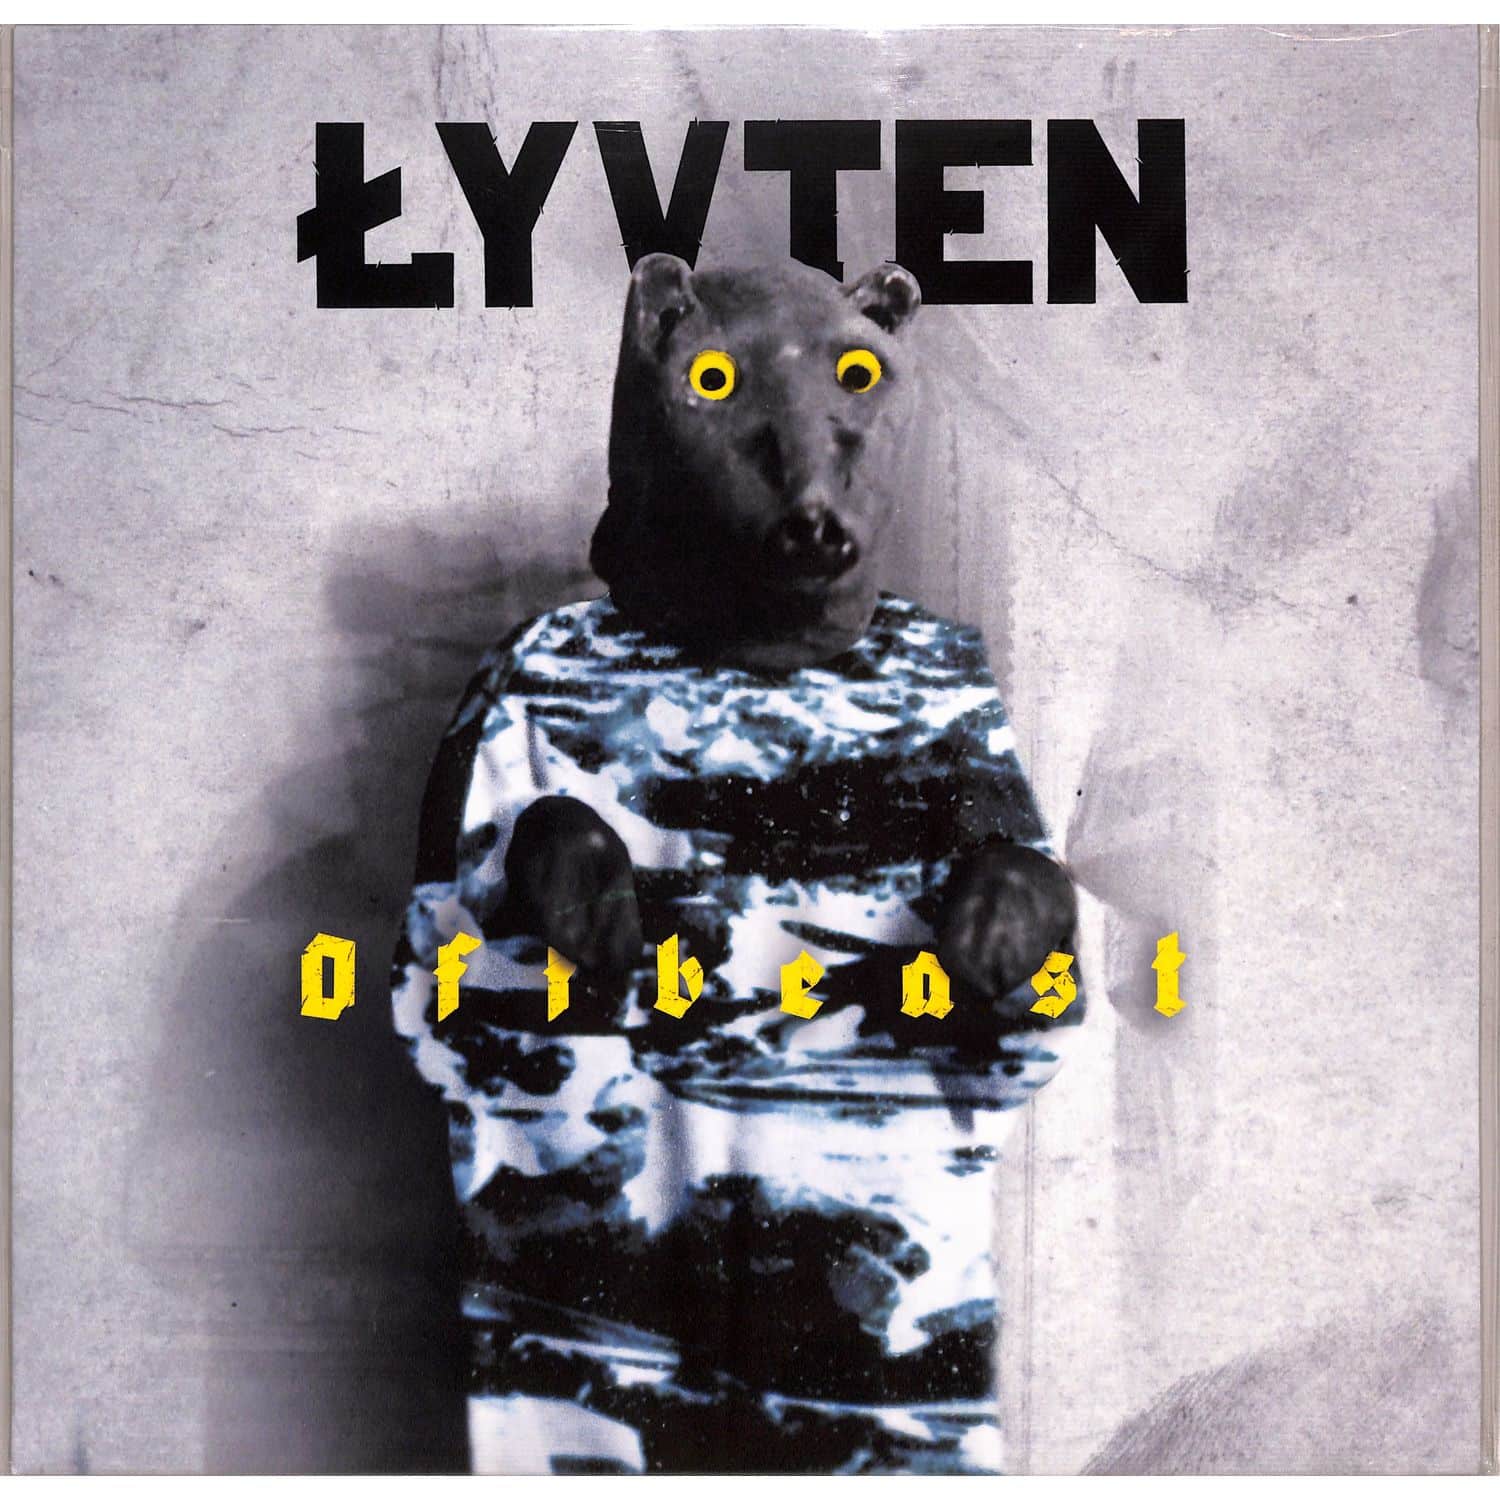 Lyvten - OFFBEAST 